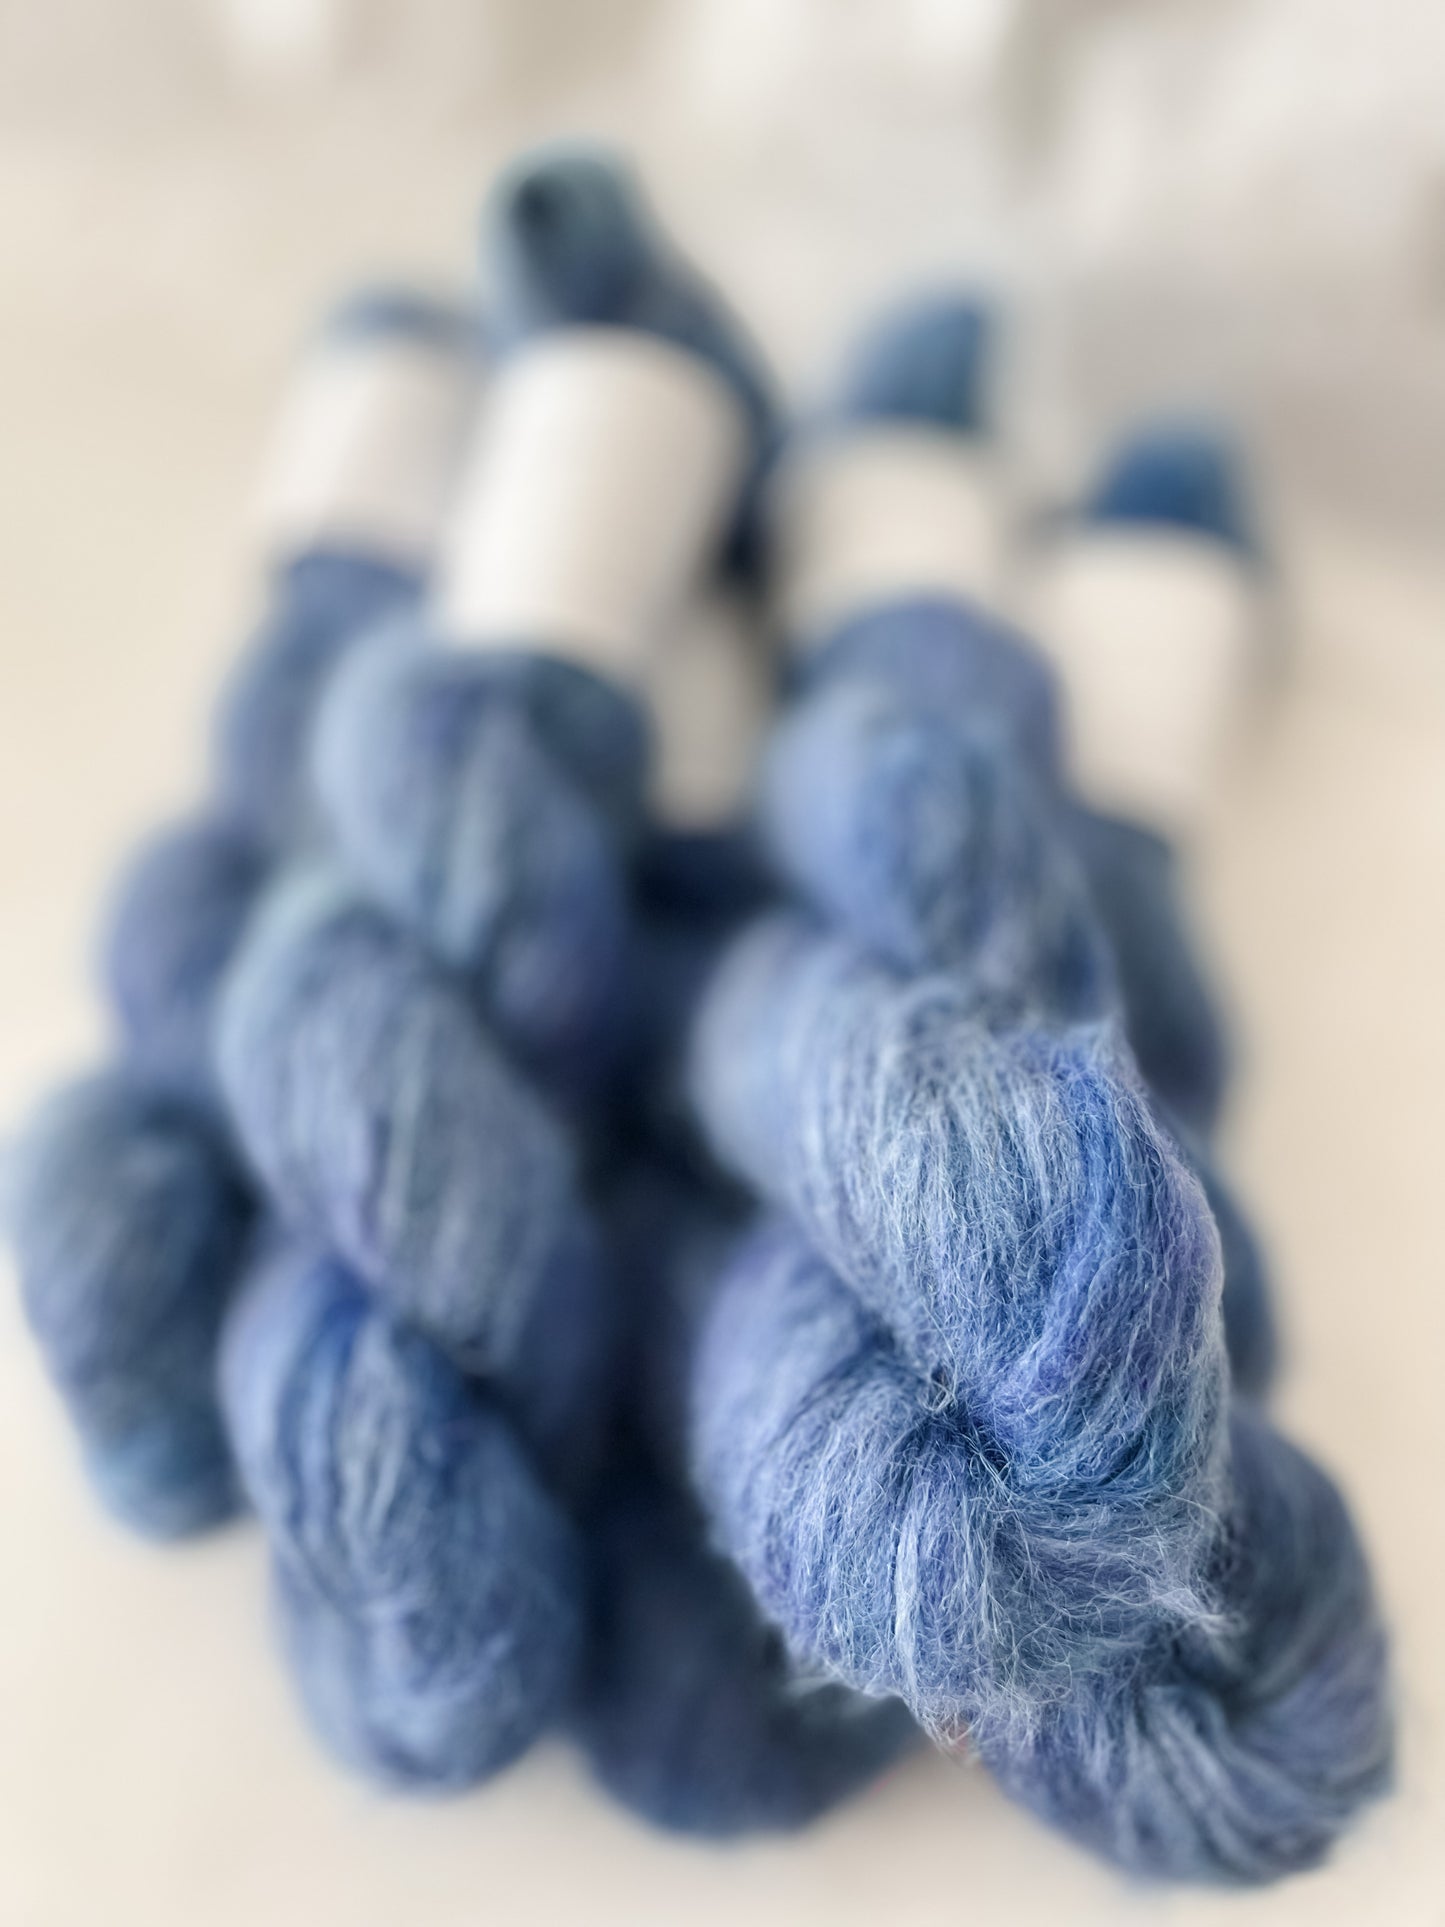 Aurora - Suri Squish - Hand Dyed Yarn - Variegated Yarn